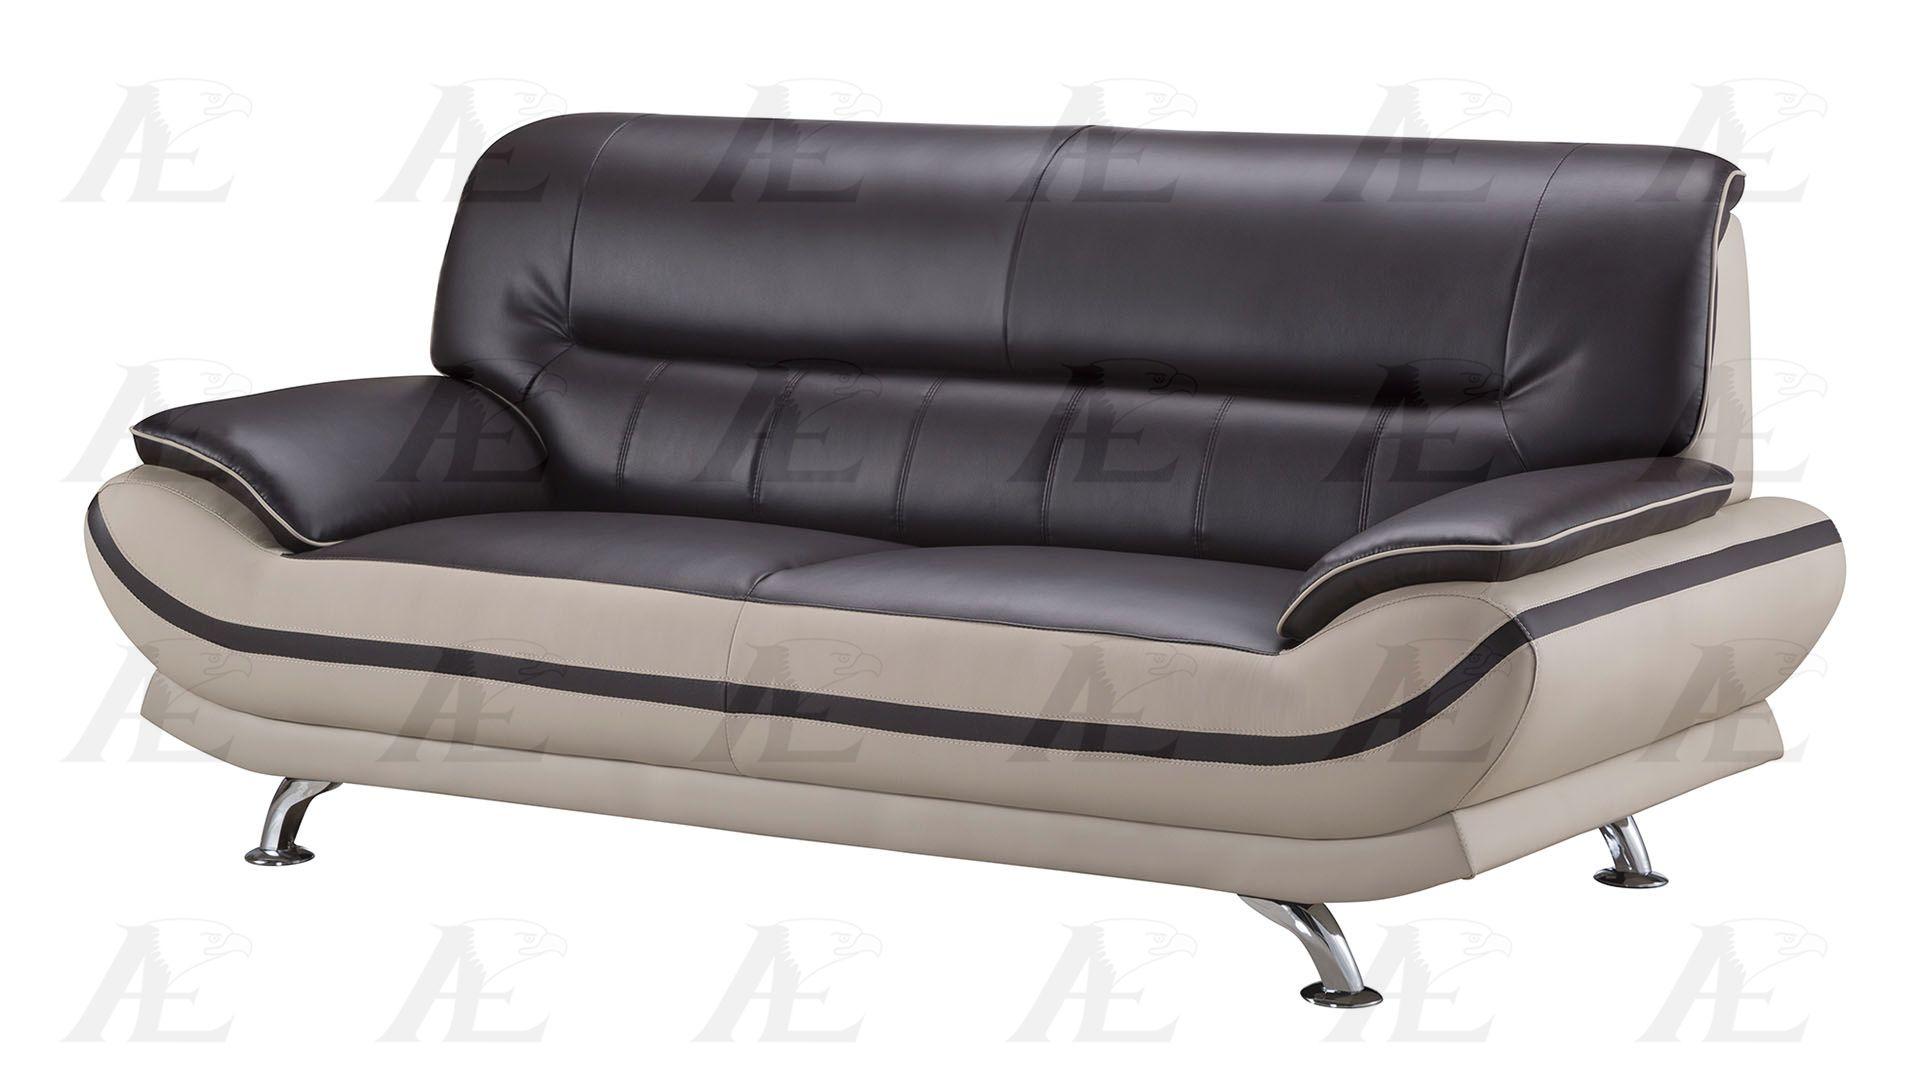 

    
American Eagle Furniture AE-709 Sofa Loveseat and Chair Set Gray/Mahogany AE709-SET-3-MA-LG
